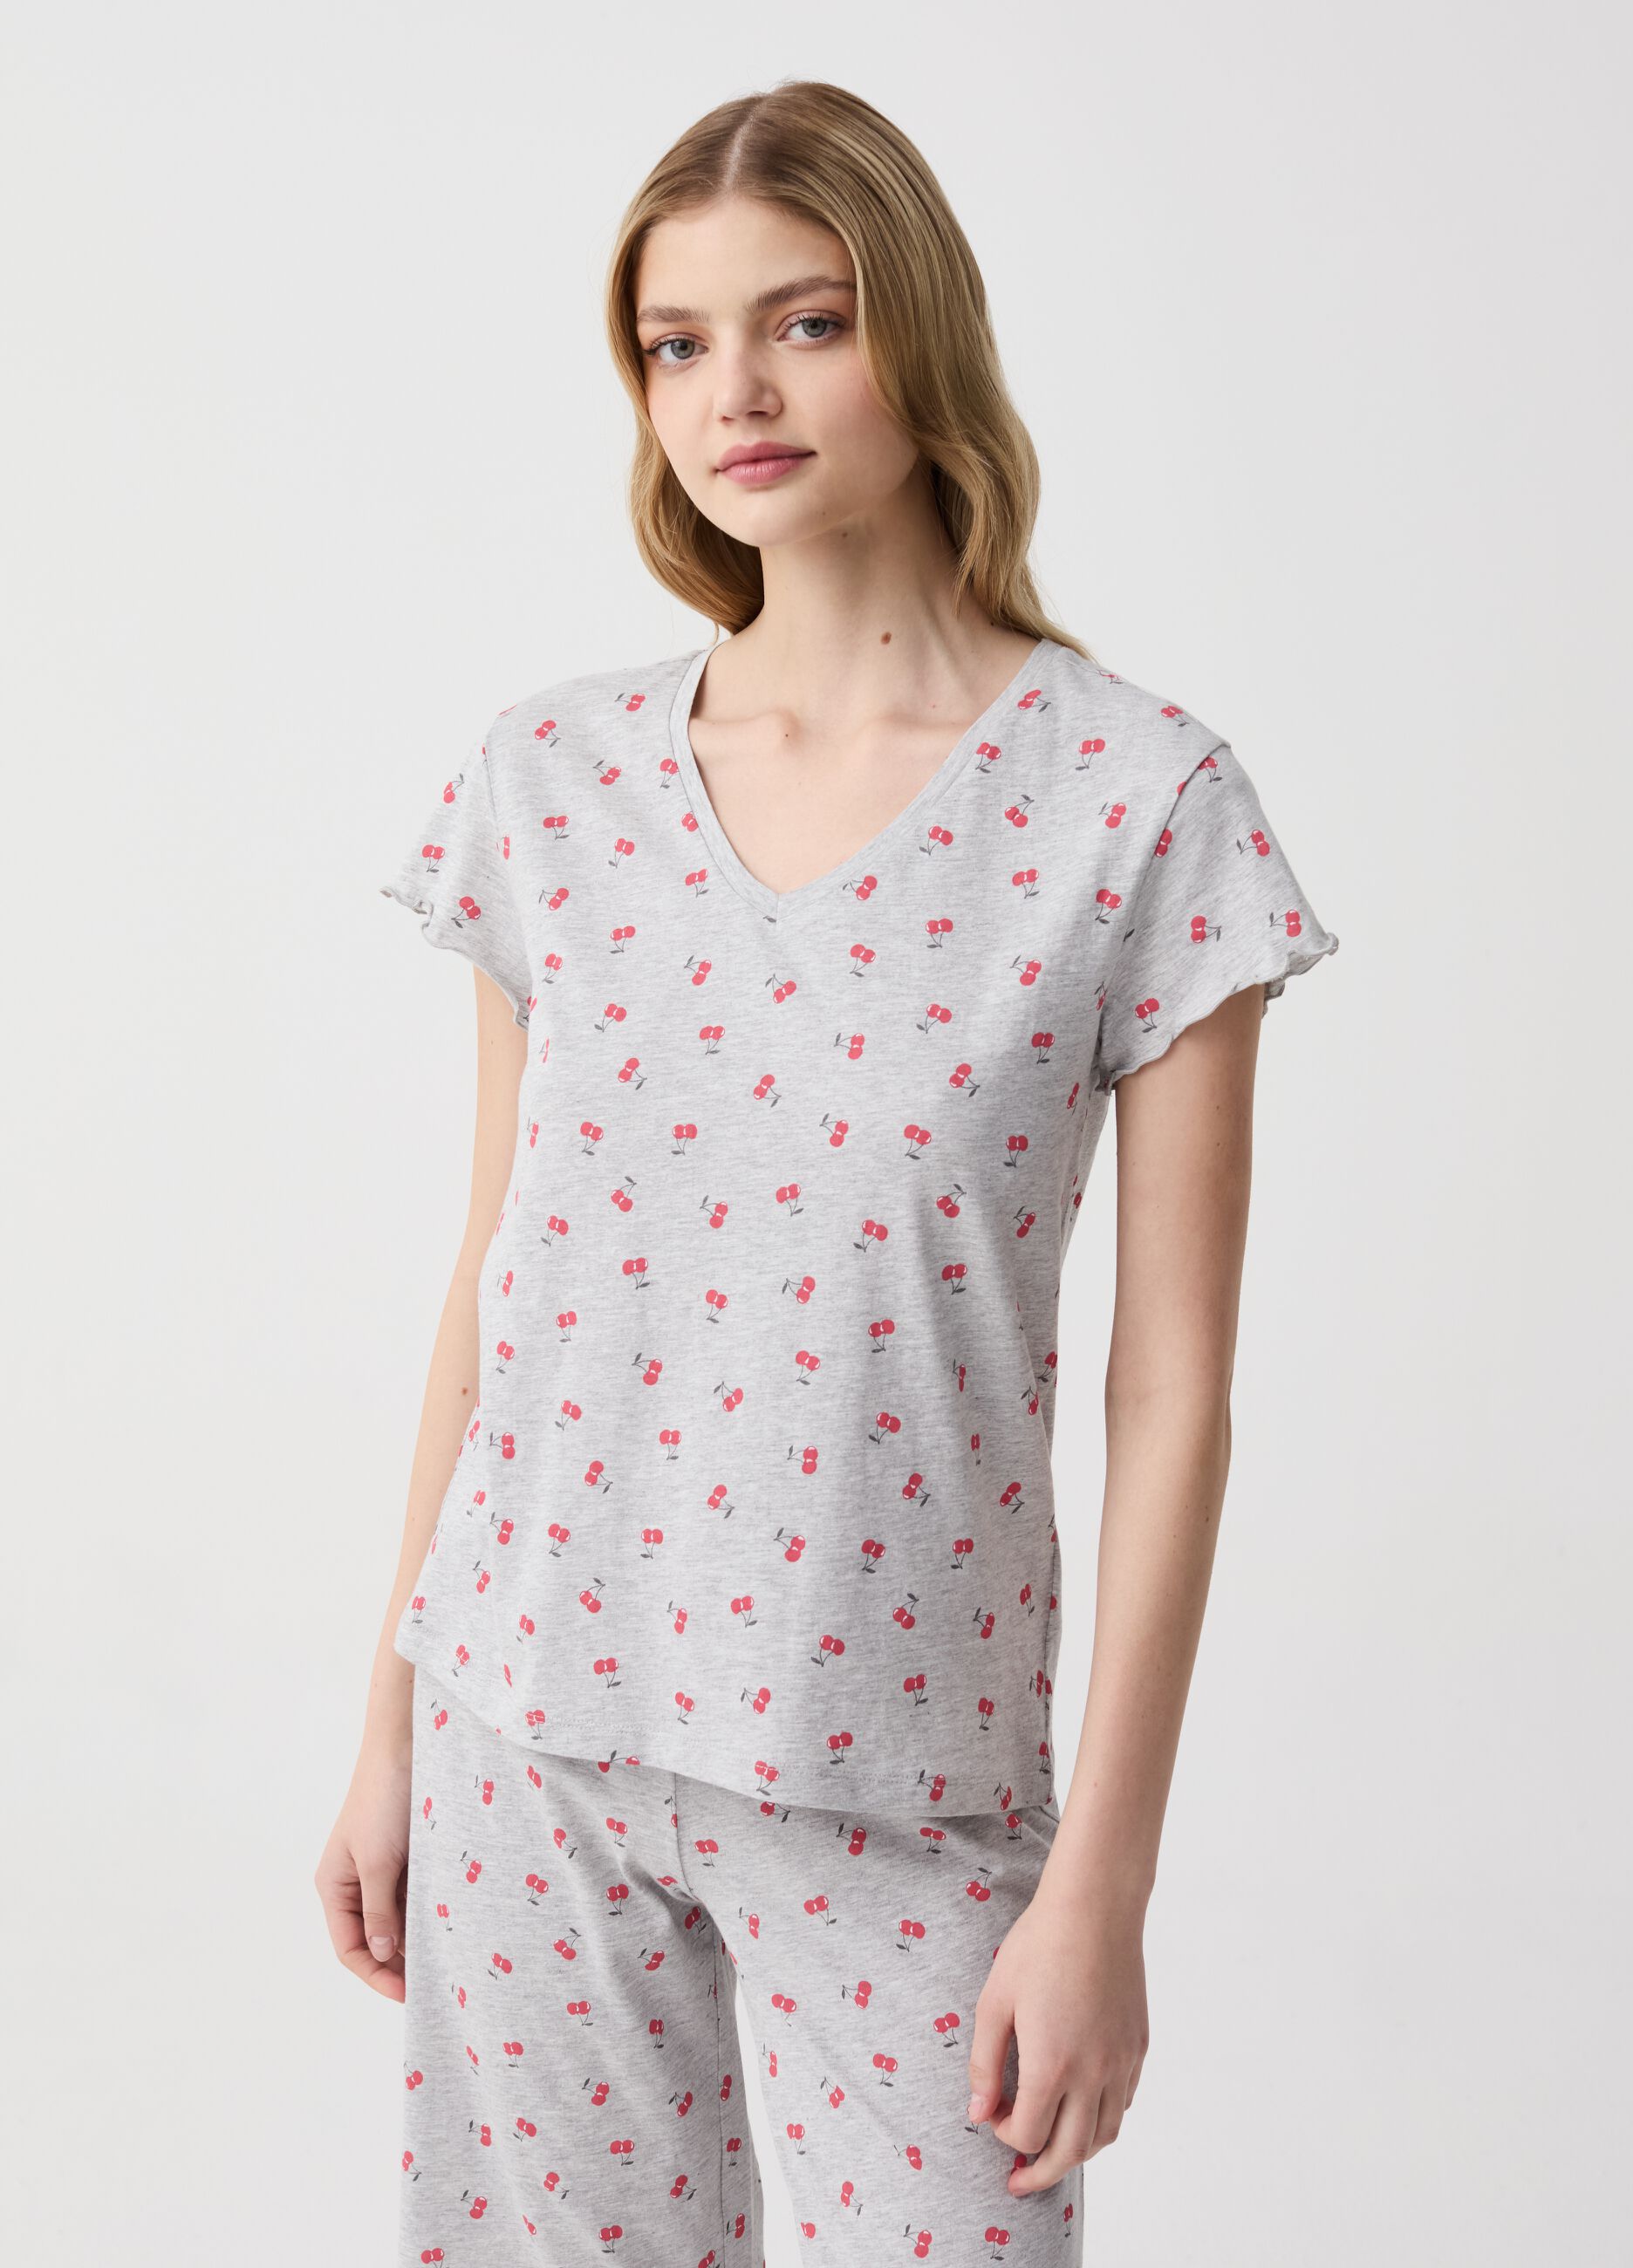 Pyjama top with cherries print